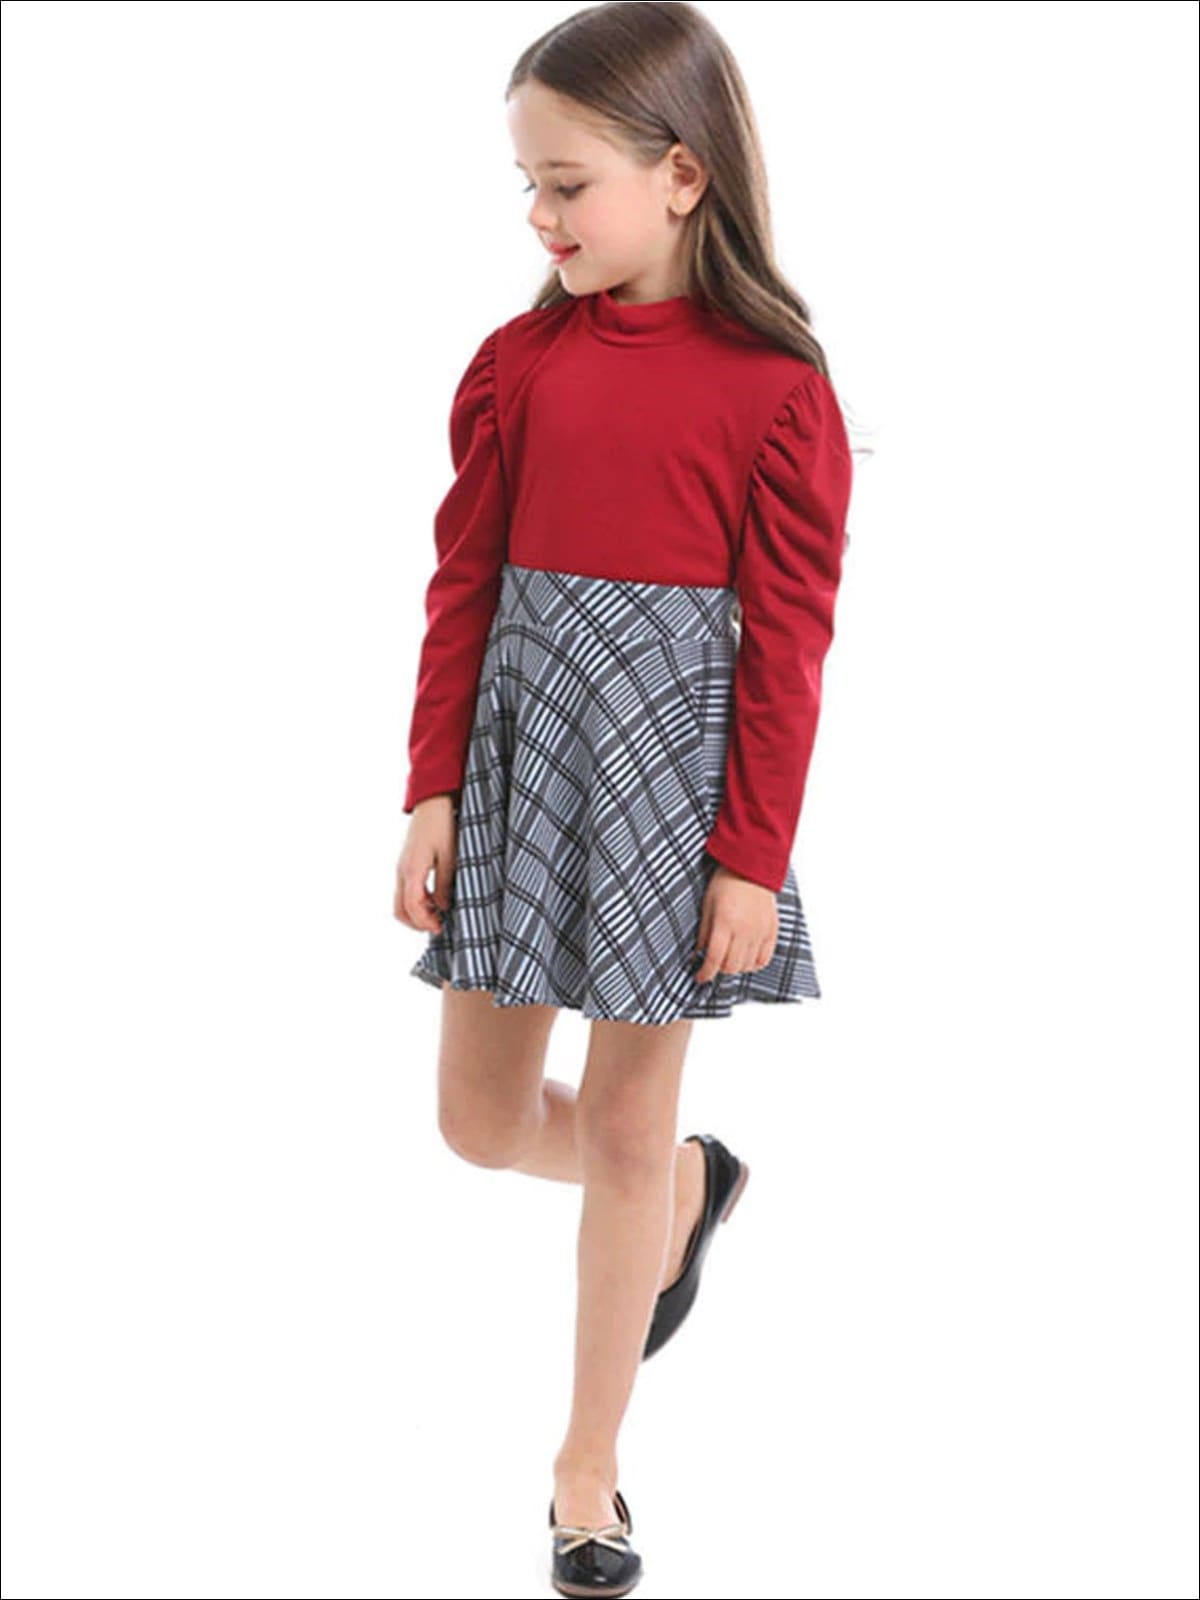 Girls Preppy Red Puff Sleeve Mock Neck Top & Grey Plaid Skirt Set - Girls Fall Dressy Set